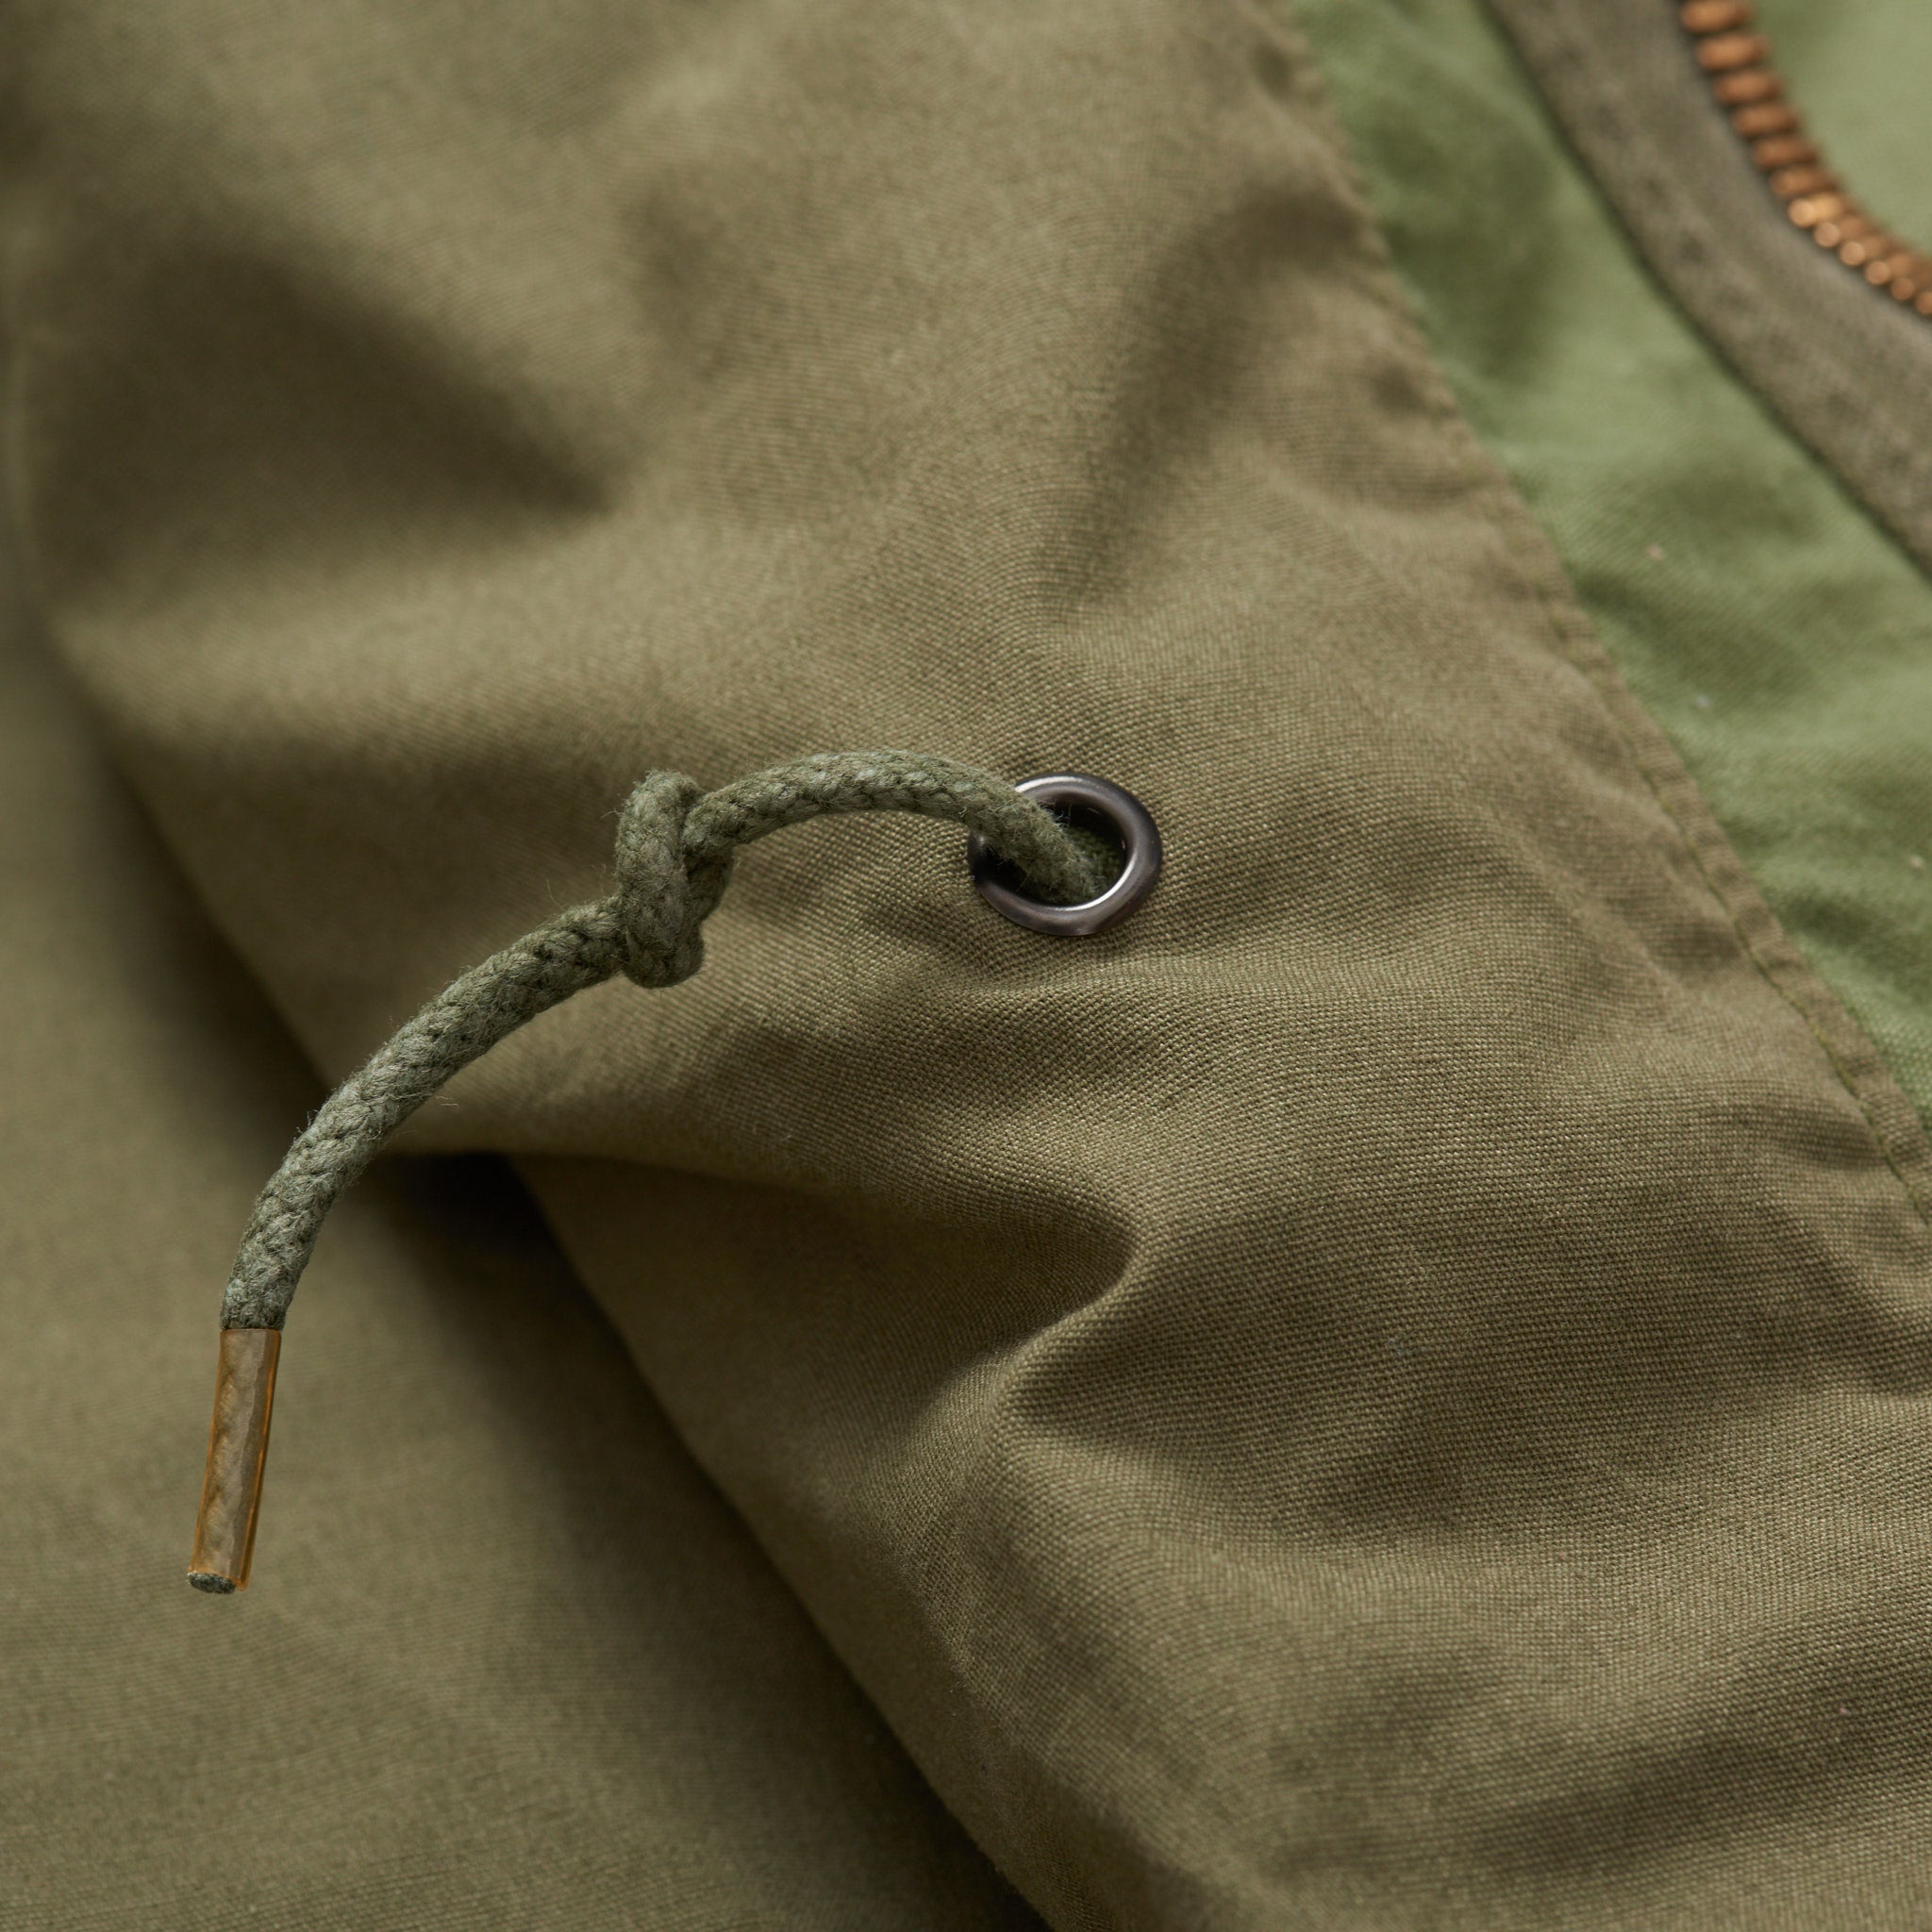 Vintage 1970's M-65 Olive Cotton Military Field Jacket Size L 1970's ALPHA INDUSTRIES